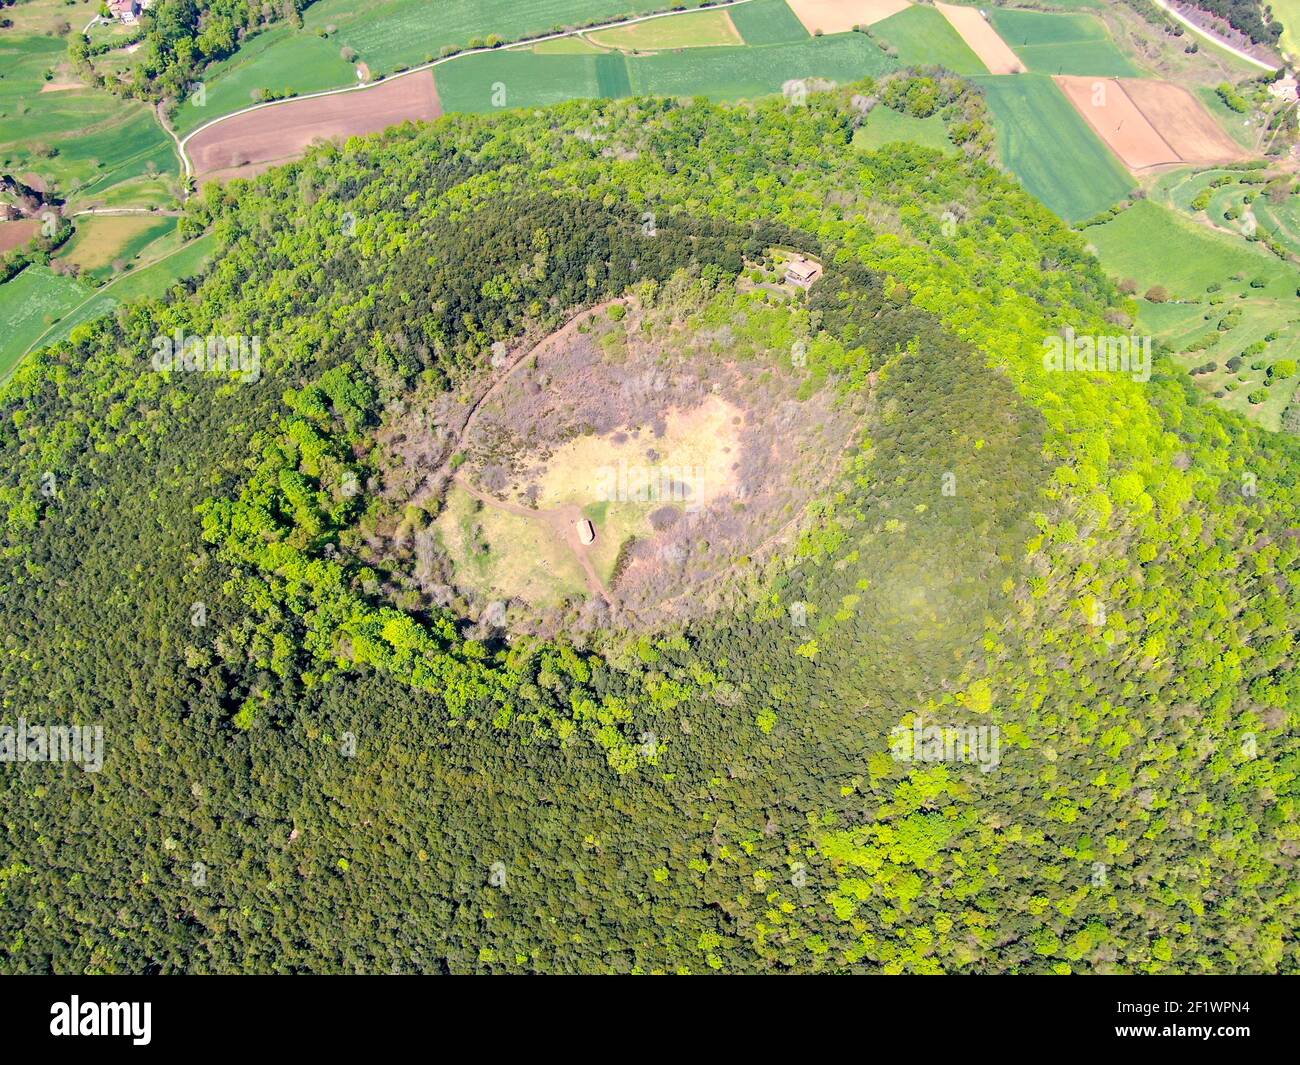 Le volcan Santa Margarida est un volcan éteint dans la comarque de Garrotxa, Catalogne, Espagne. Banque D'Images